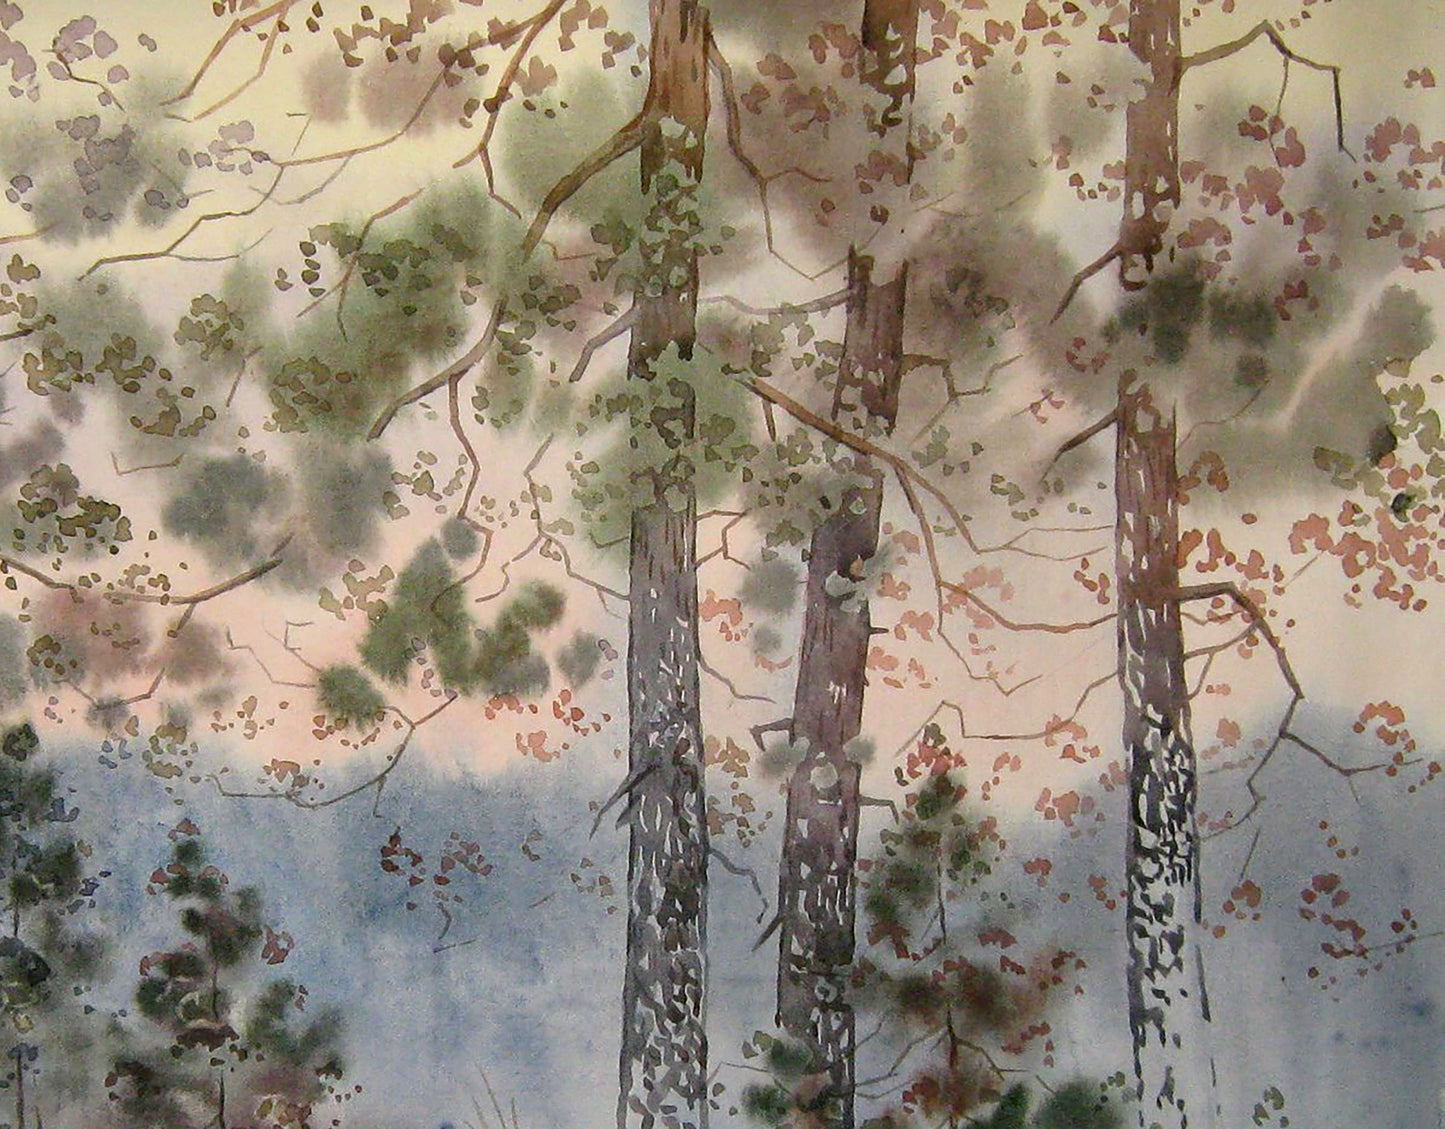 Valery Savenets' watercolor artwork "Misty Winter Forest"